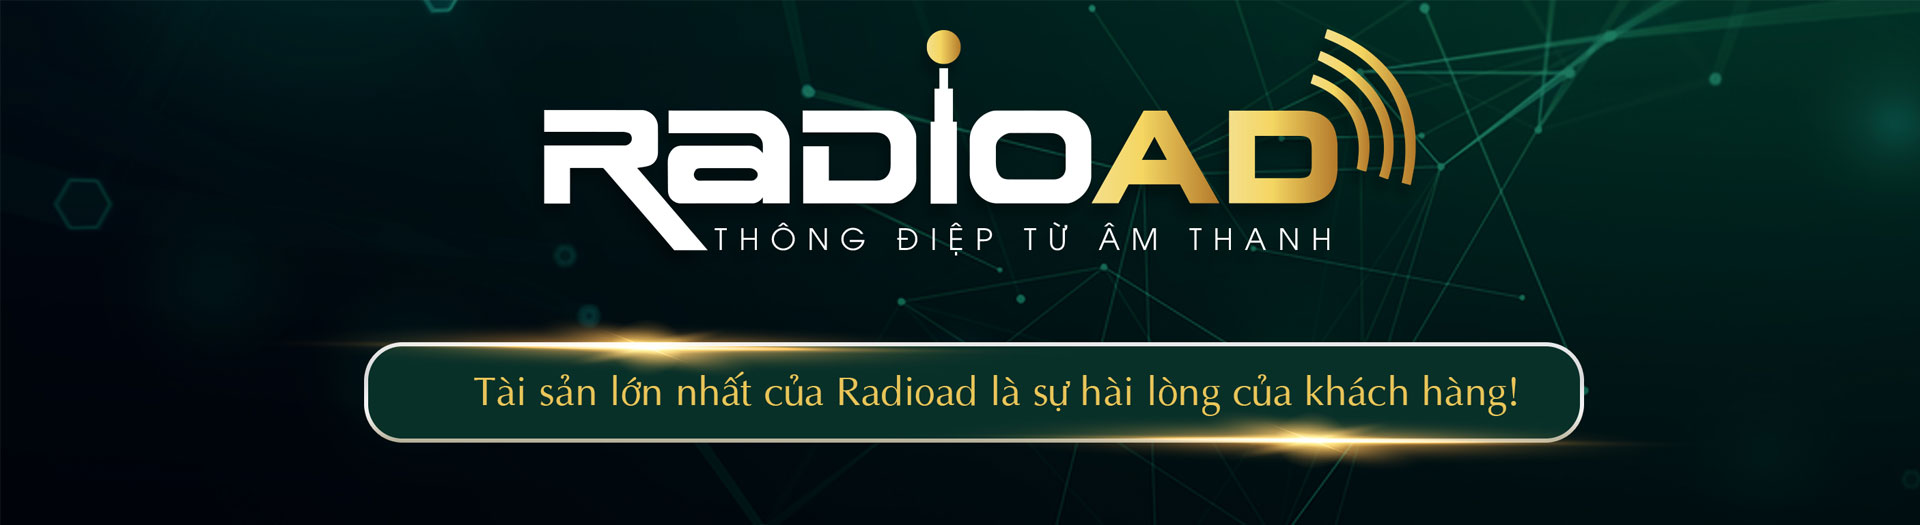 Radio Việt Nam